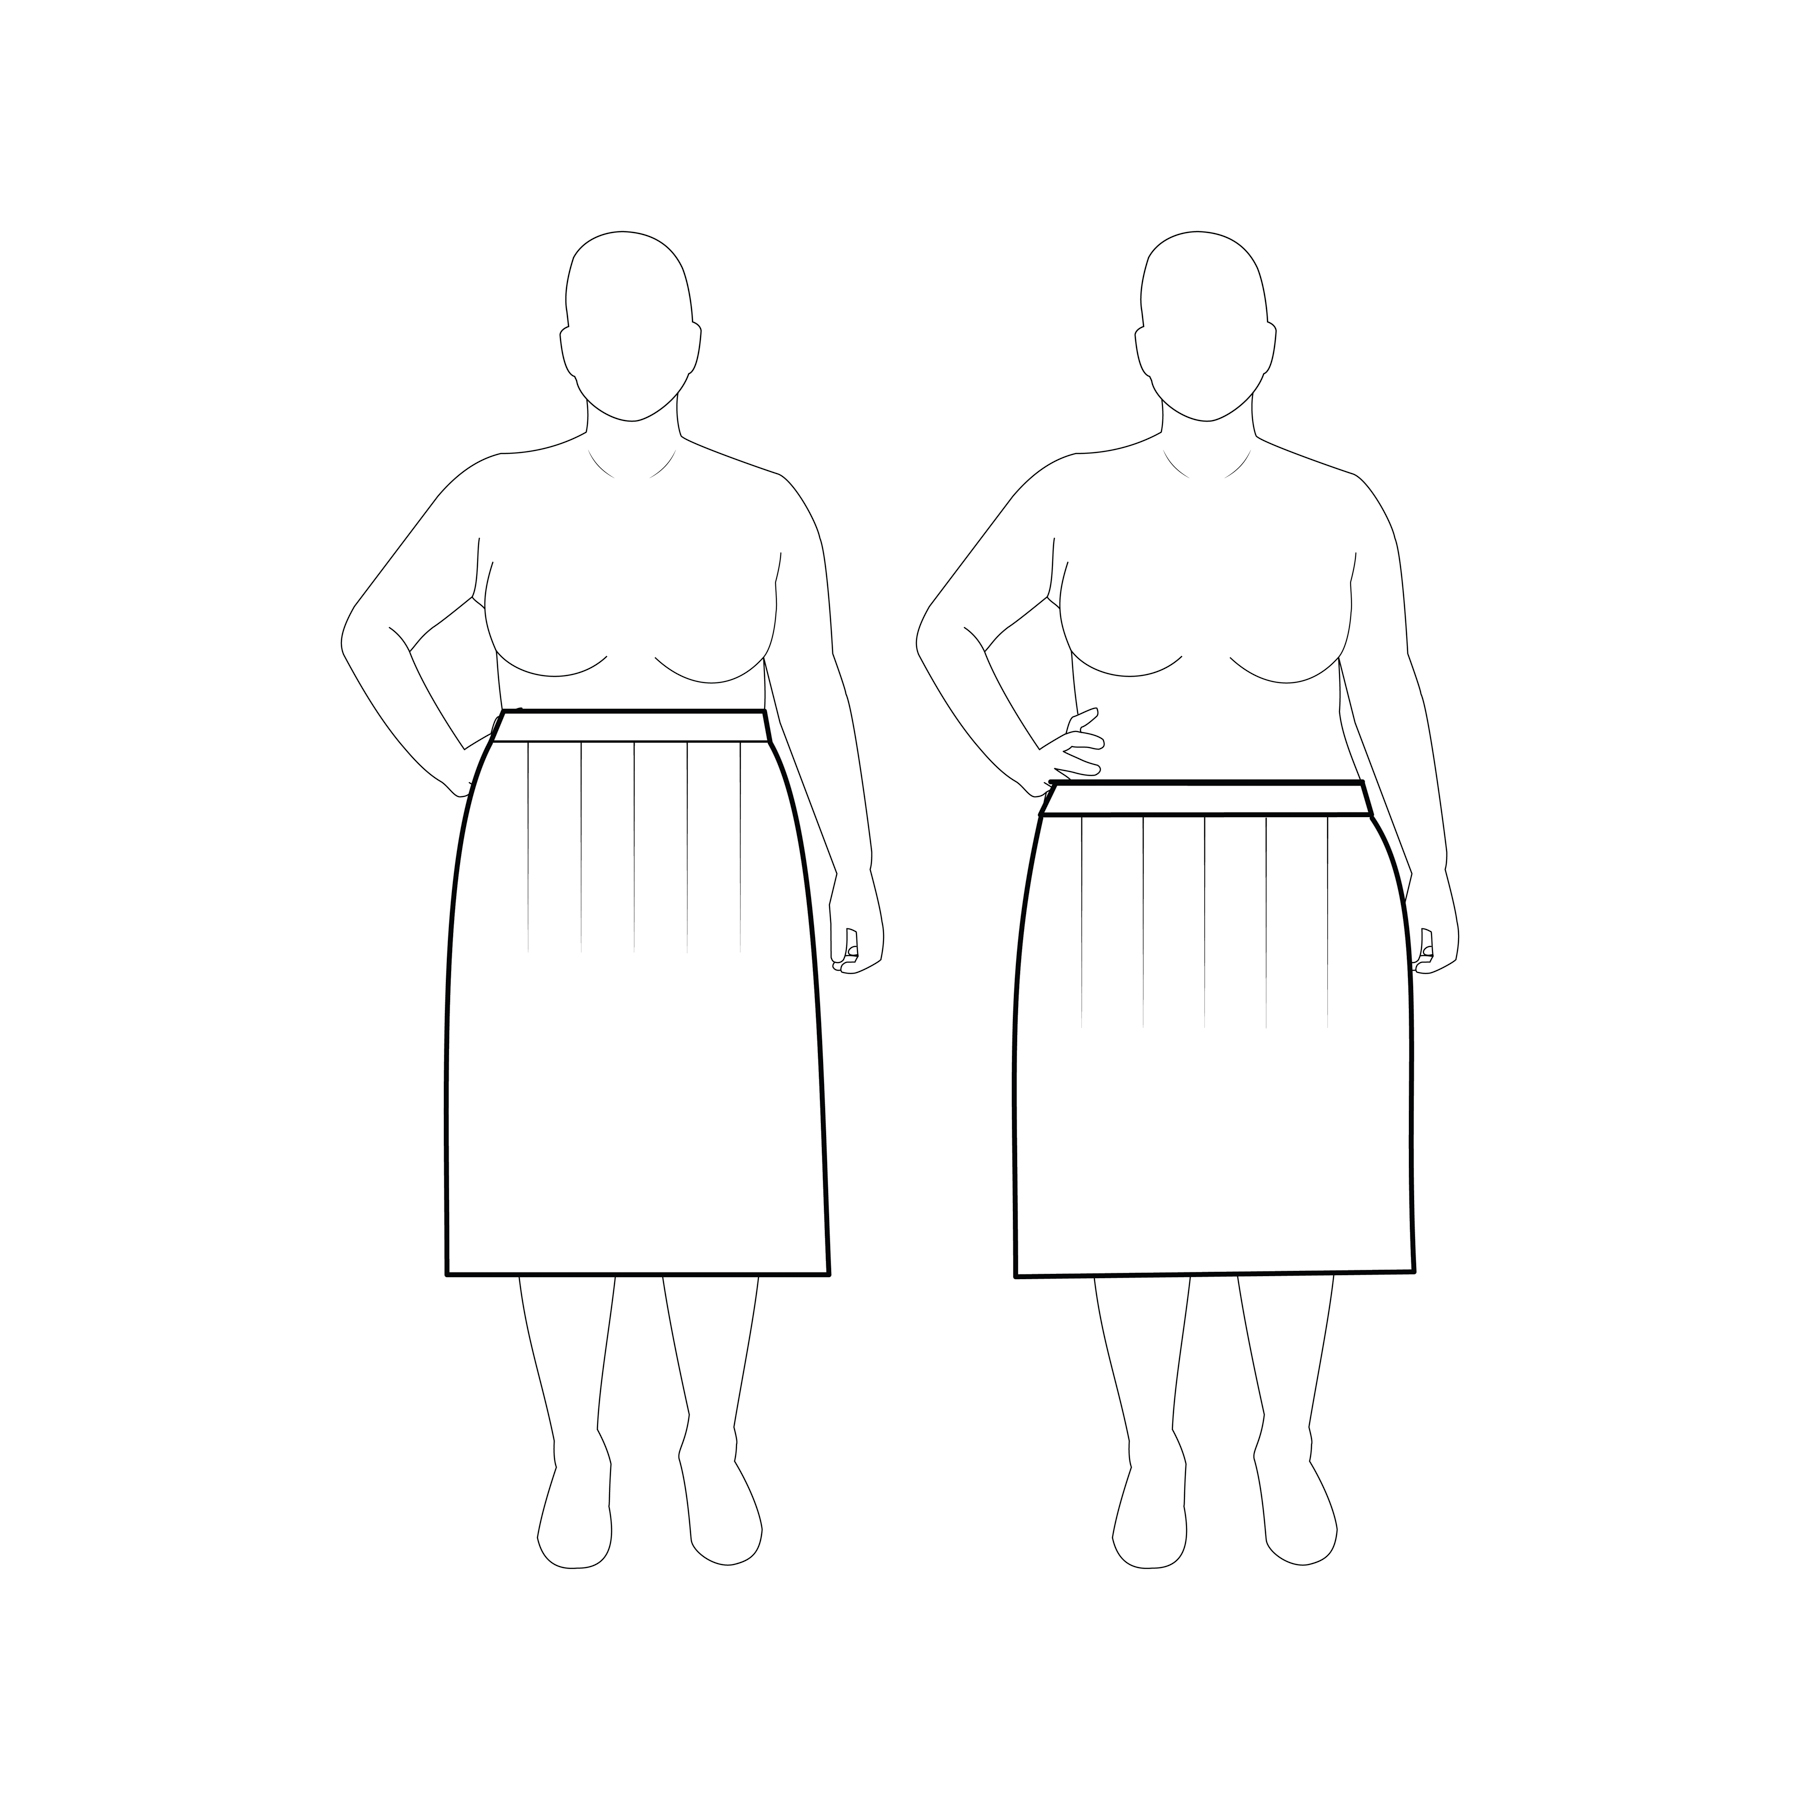 How To Measure Your Natural Waist (Sene Women's Body Measurement